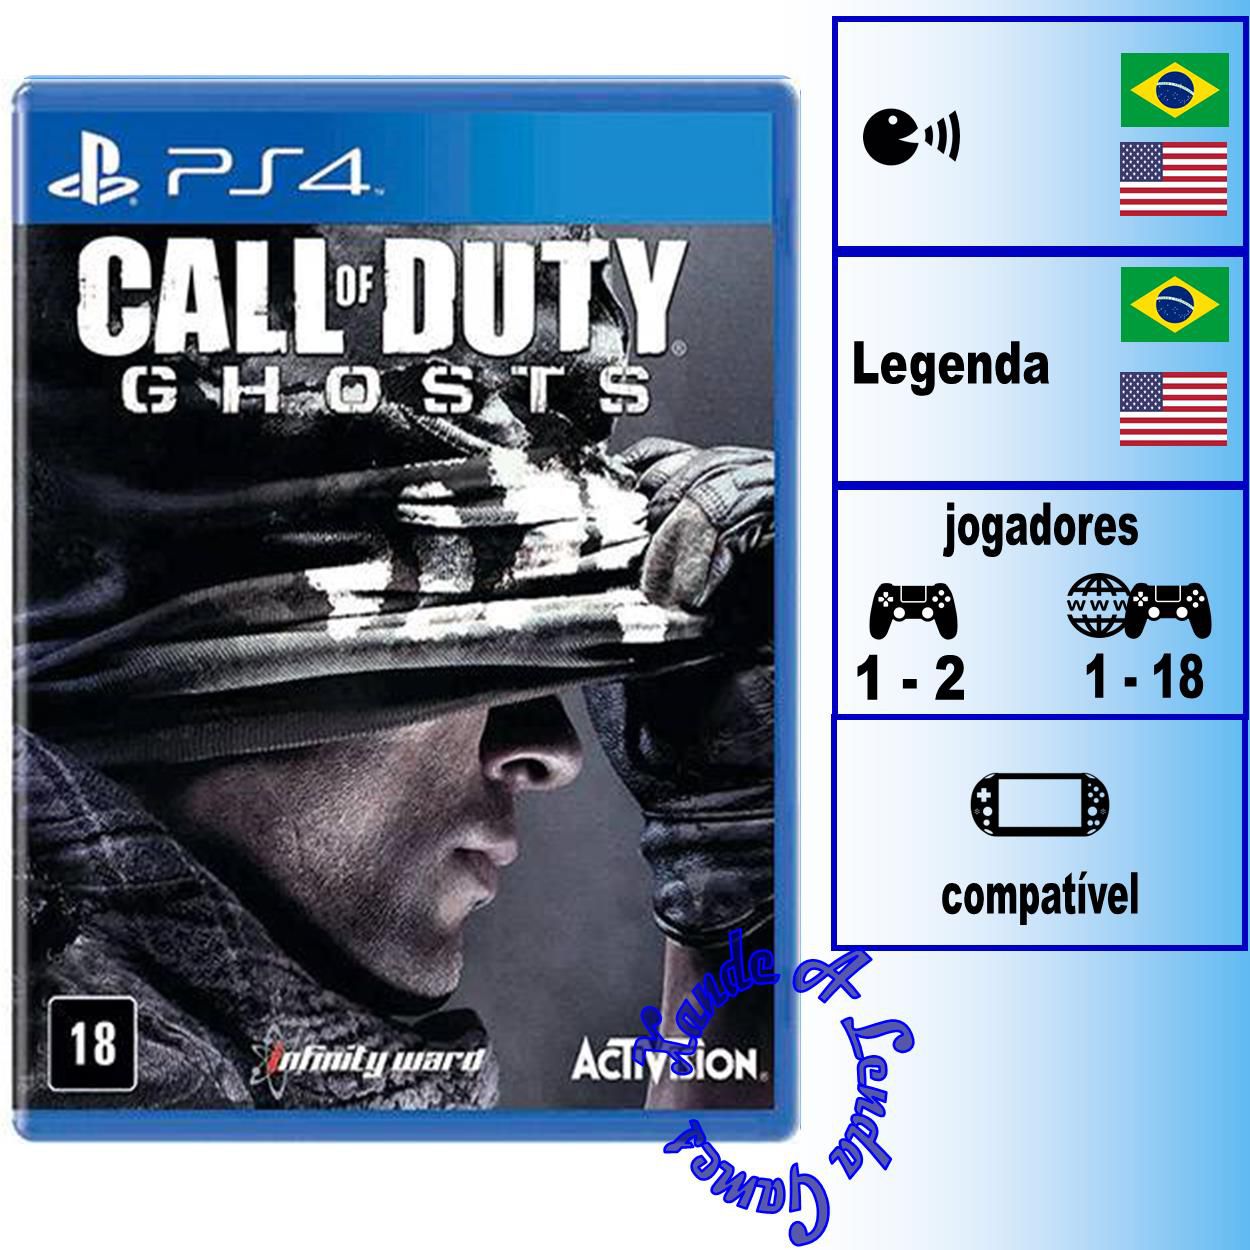 Comprar Call of Duty Ghosts para PS4 - mídia física - Xande A Lenda Games.  A sua loja de jogos!